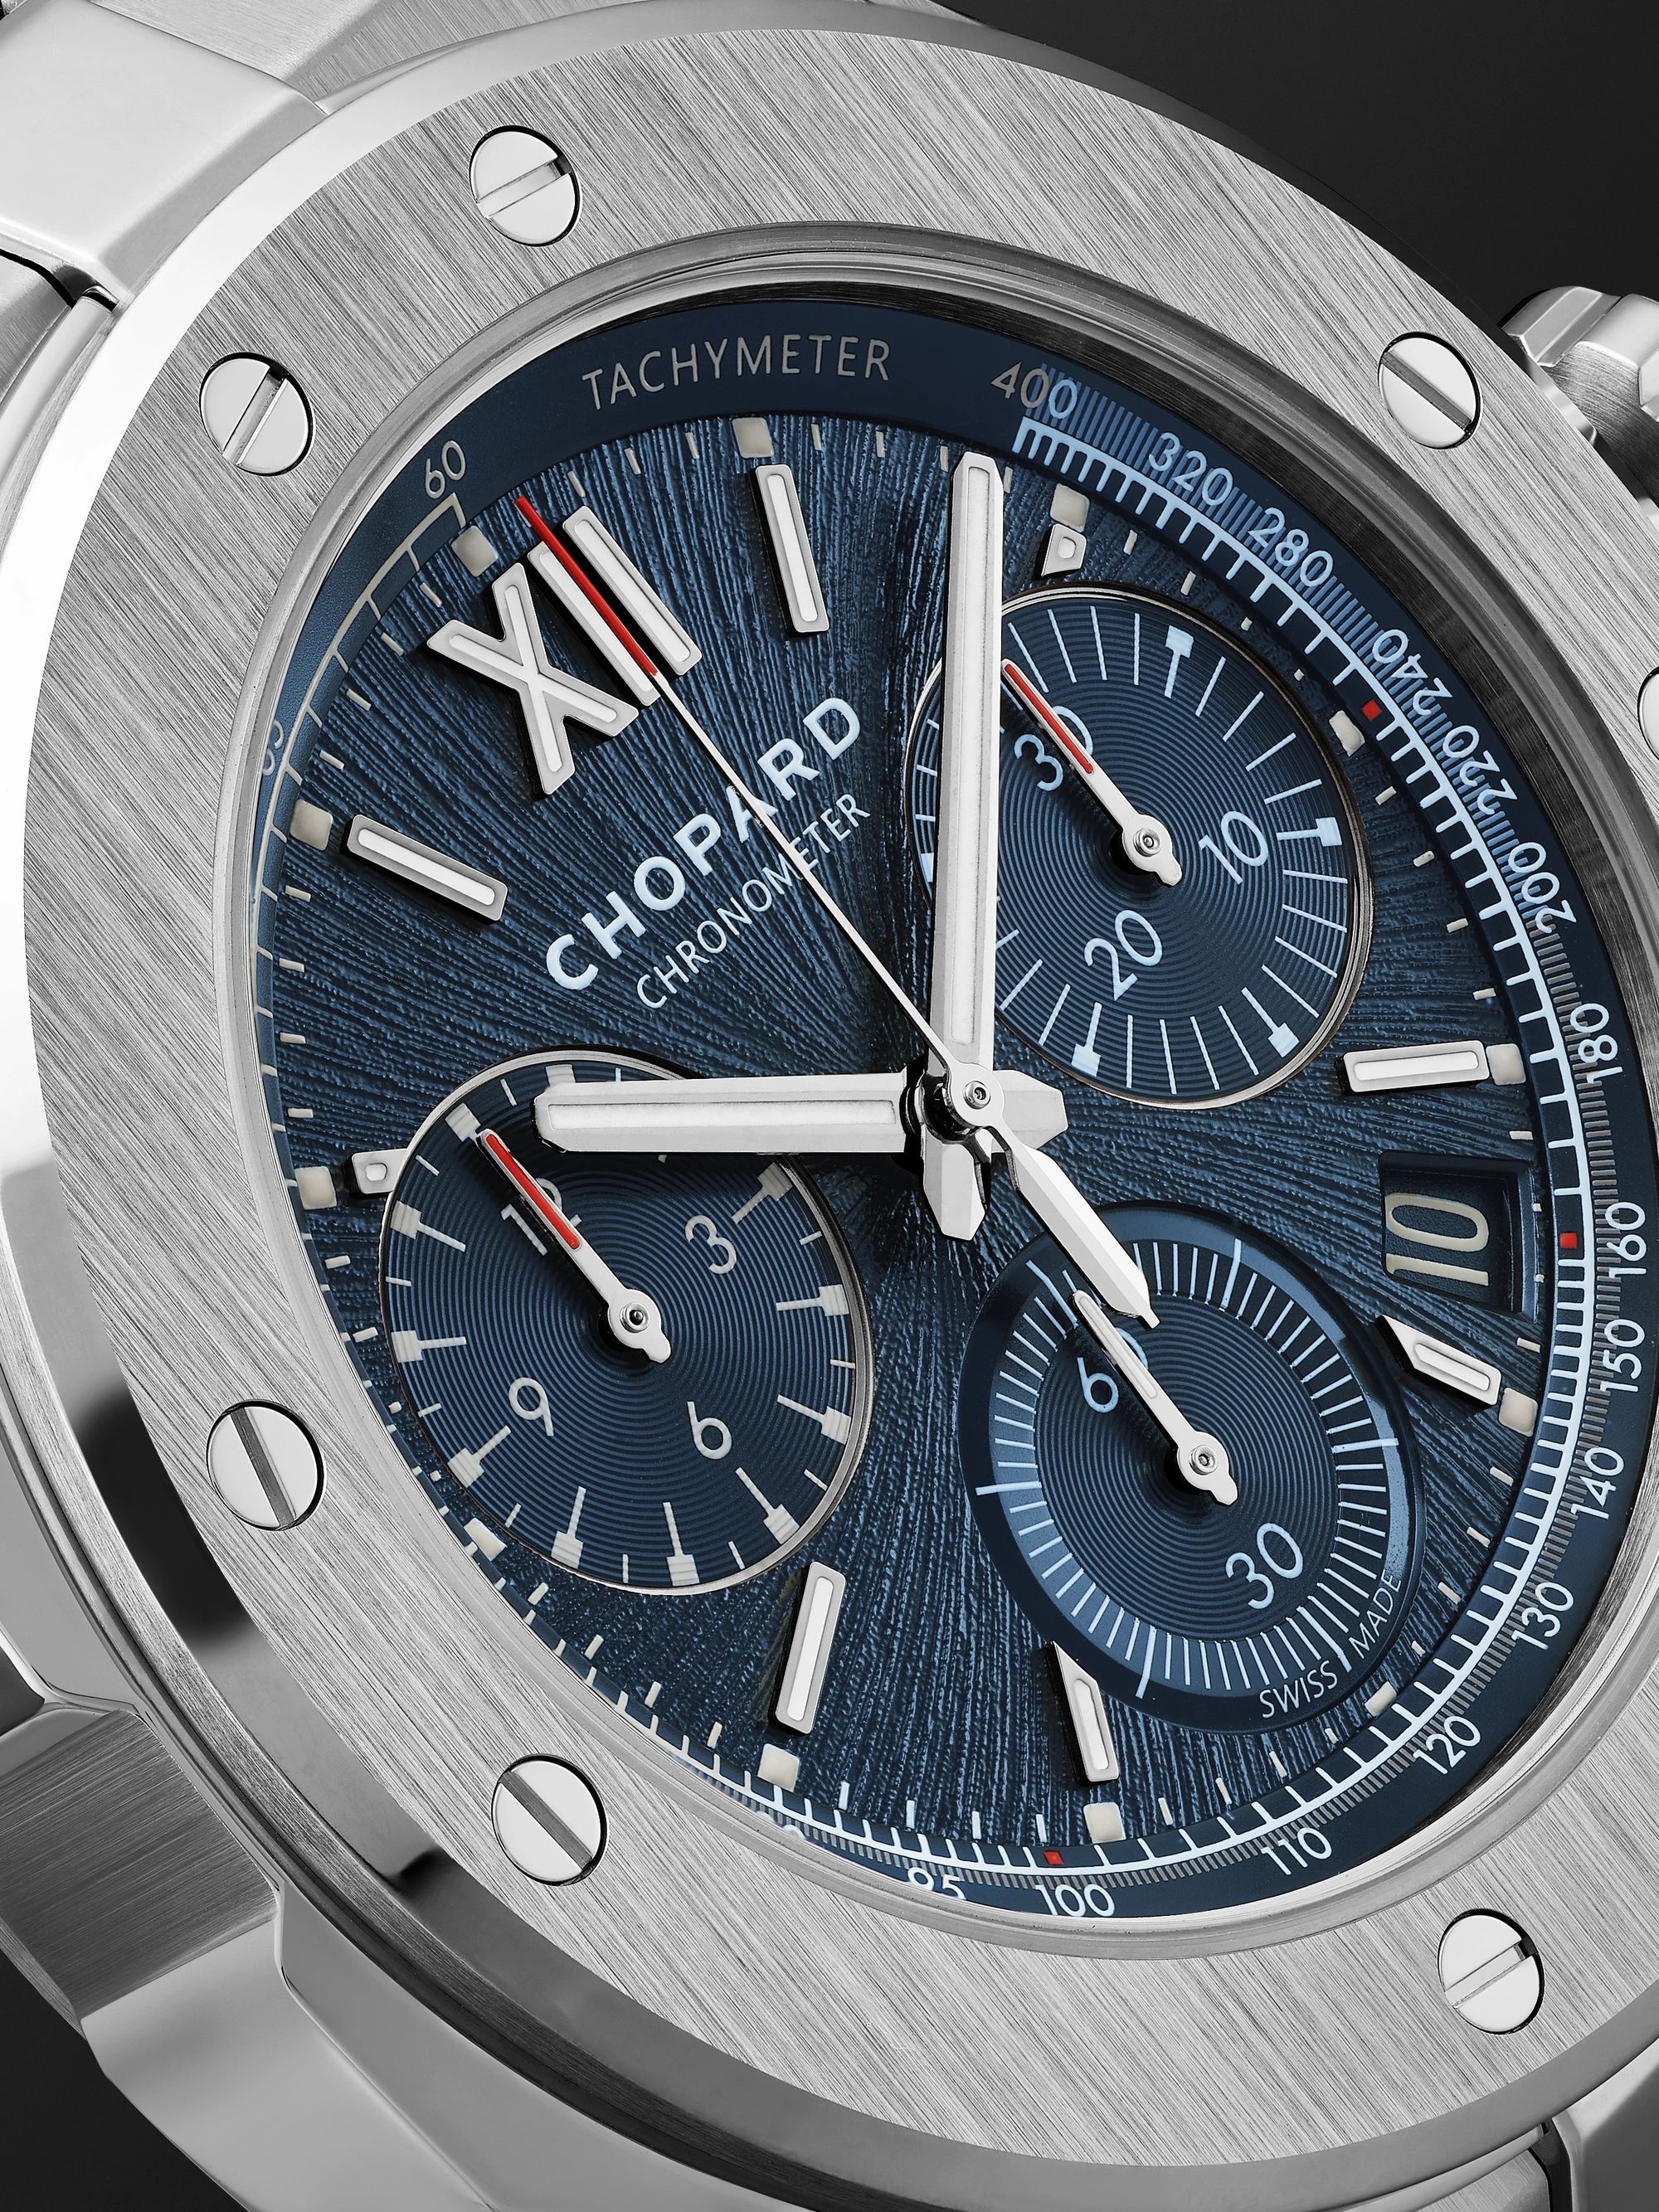 CHOPARD Alpine Eagle XL Chrono Automatic 44mm Lucent Steel Watch, Ref. No. 298609-3001